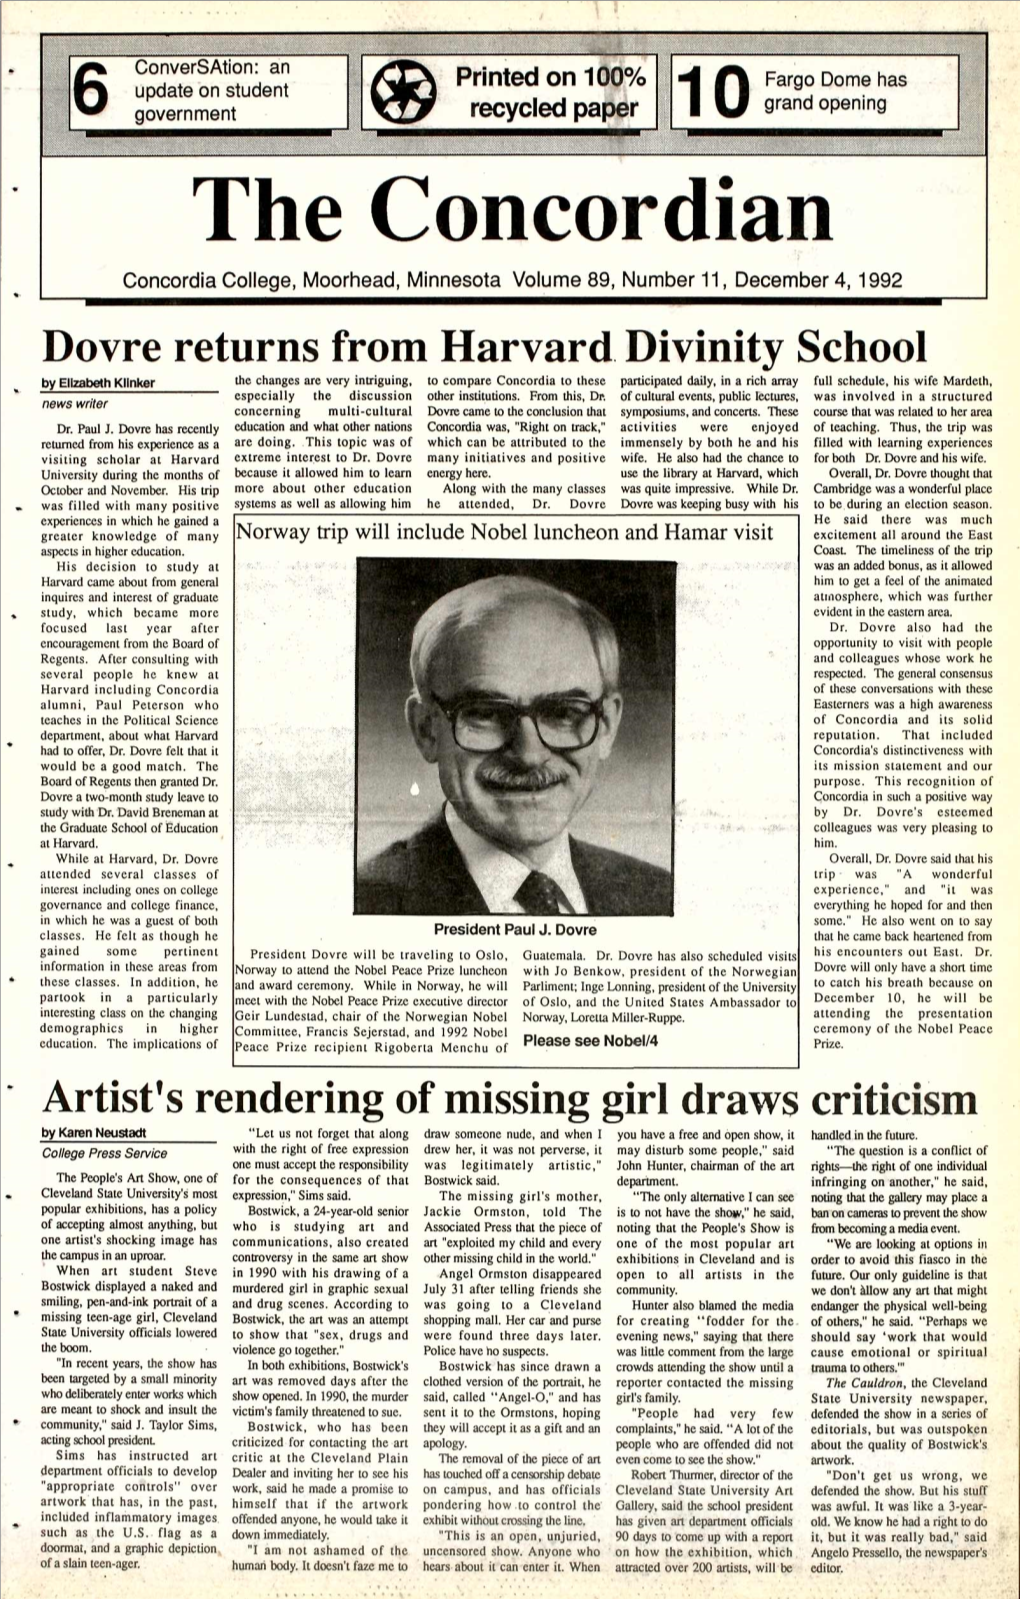 Dovre Returns from Harvard Divinity School Artist's Rendering of Missing